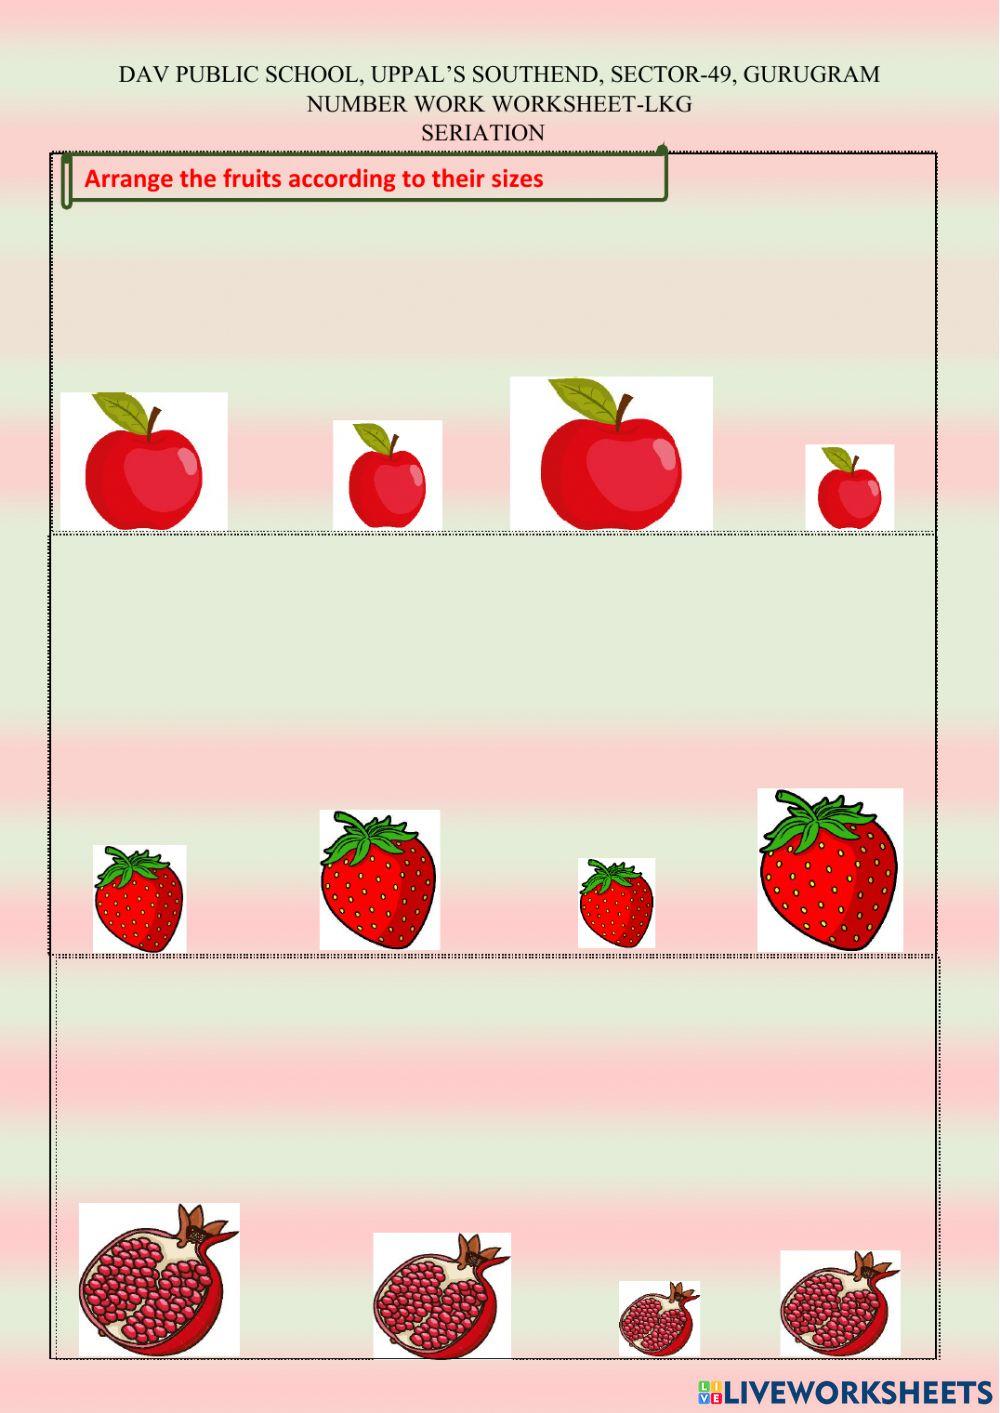 Arrange the fruits according to their sizes